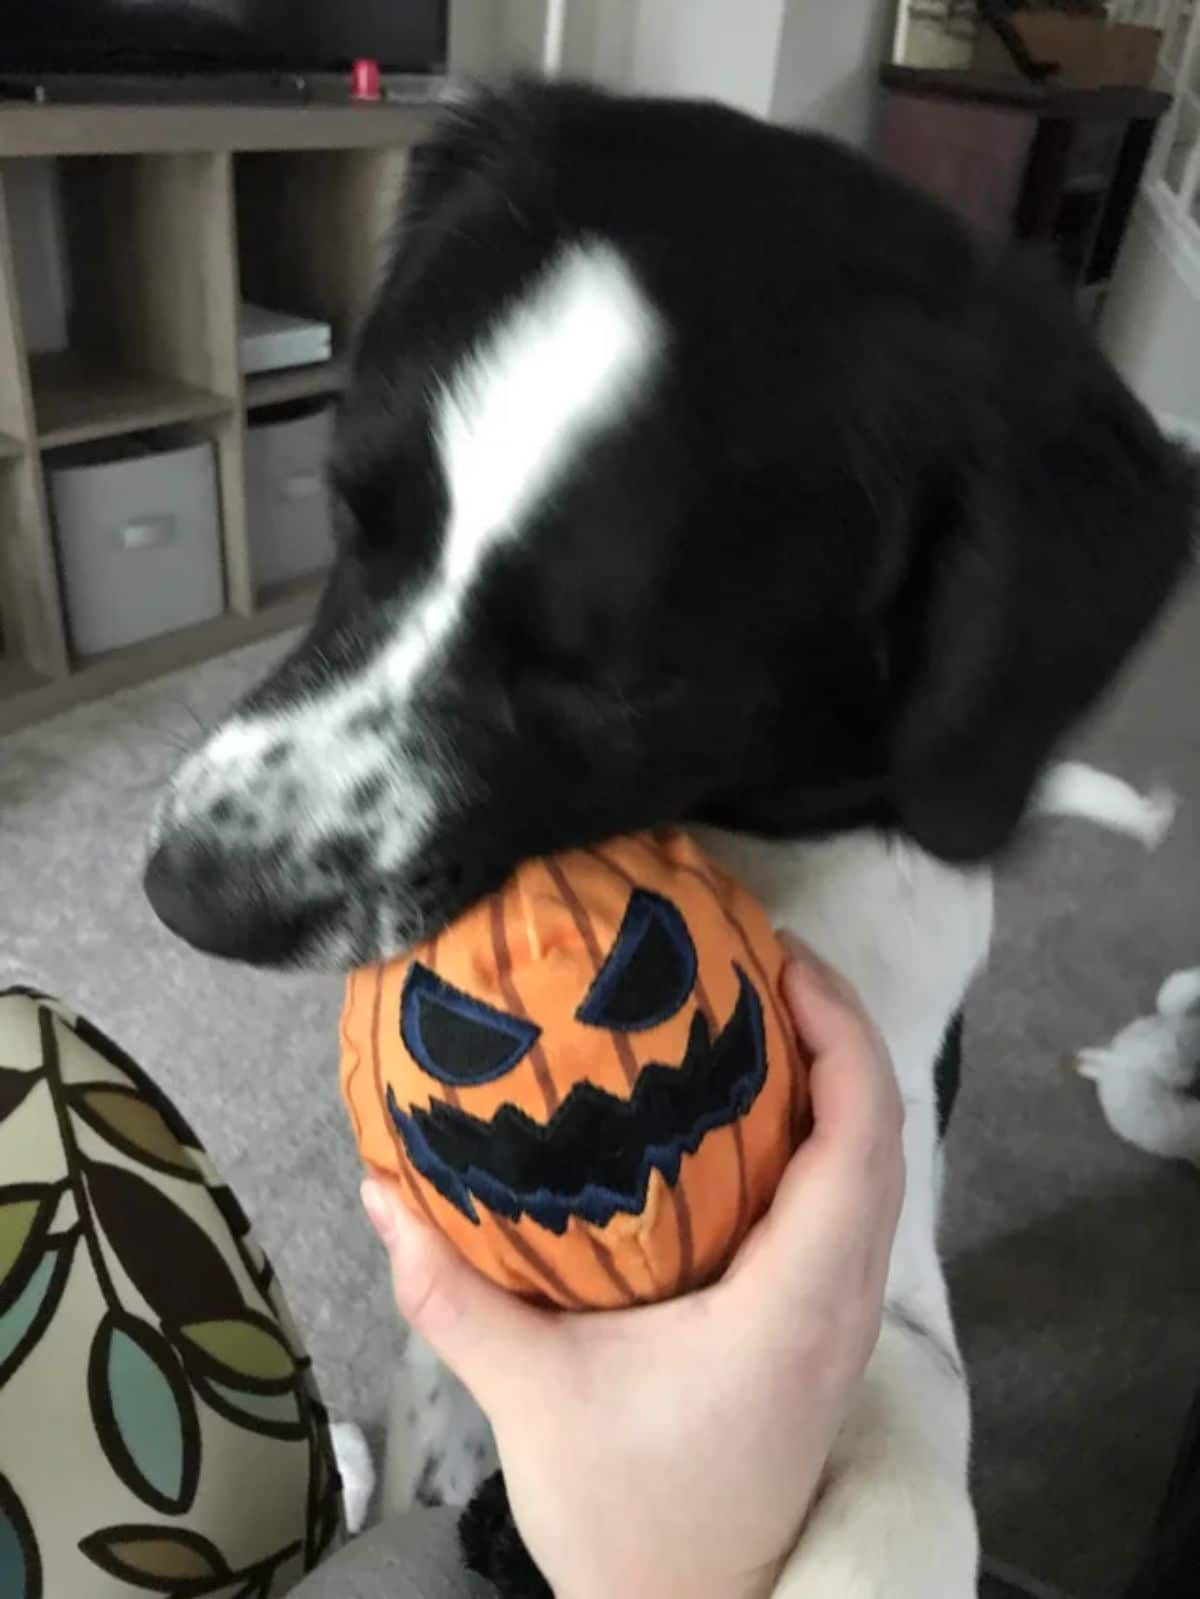 black and white dog biting an evil-looking orange cloth pumpkin